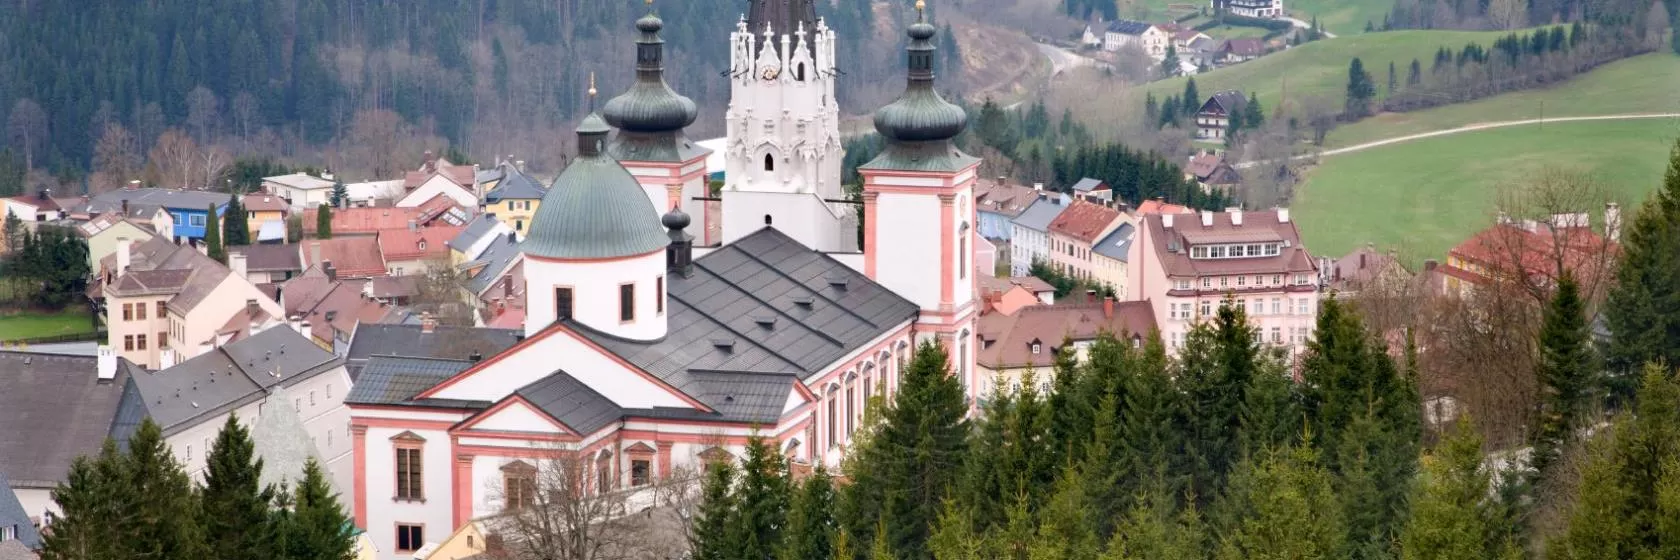 Mariazell, Styria Hotels & Accommodation